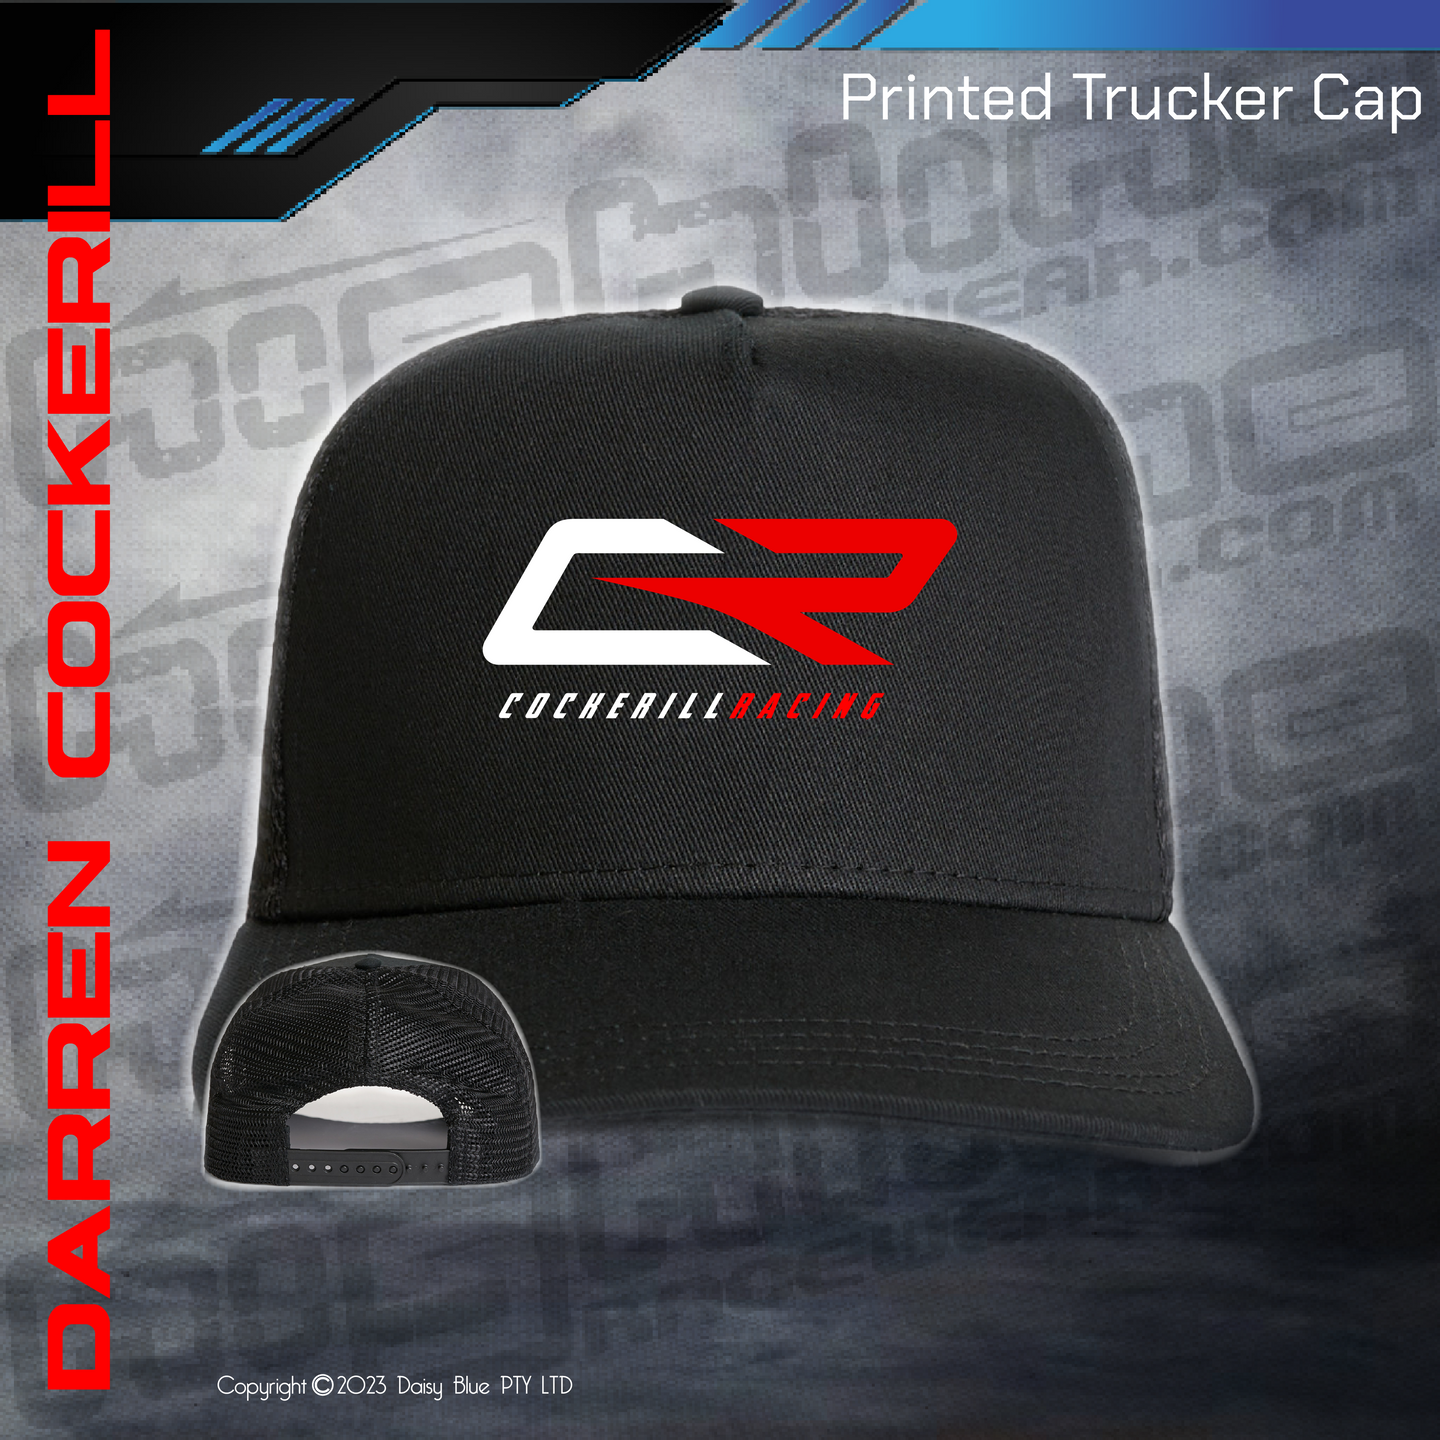 Printed Trucker Cap - Cockerill Racing